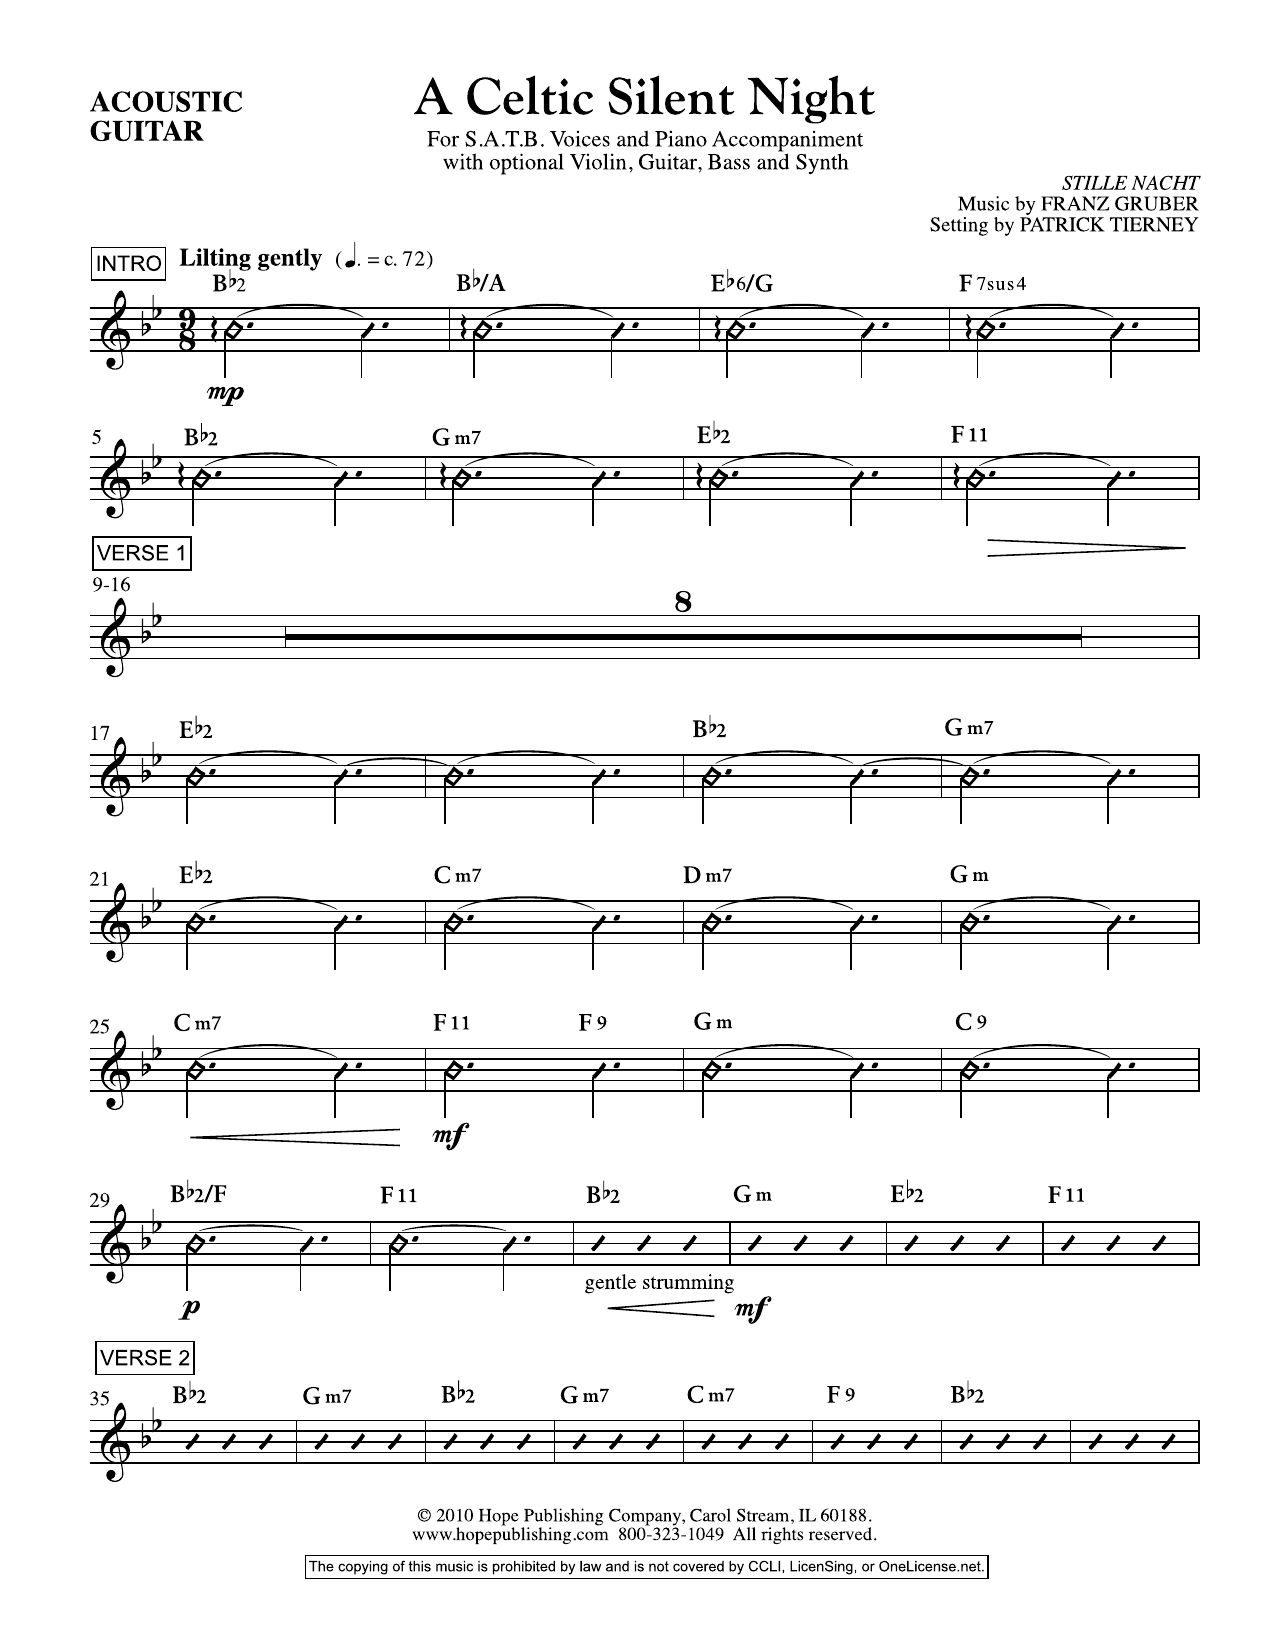 Franz Gruber A Celtic Silent Night - Acoustic Guitar Sheet Music Notes & Chords for Choir Instrumental Pak - Download or Print PDF